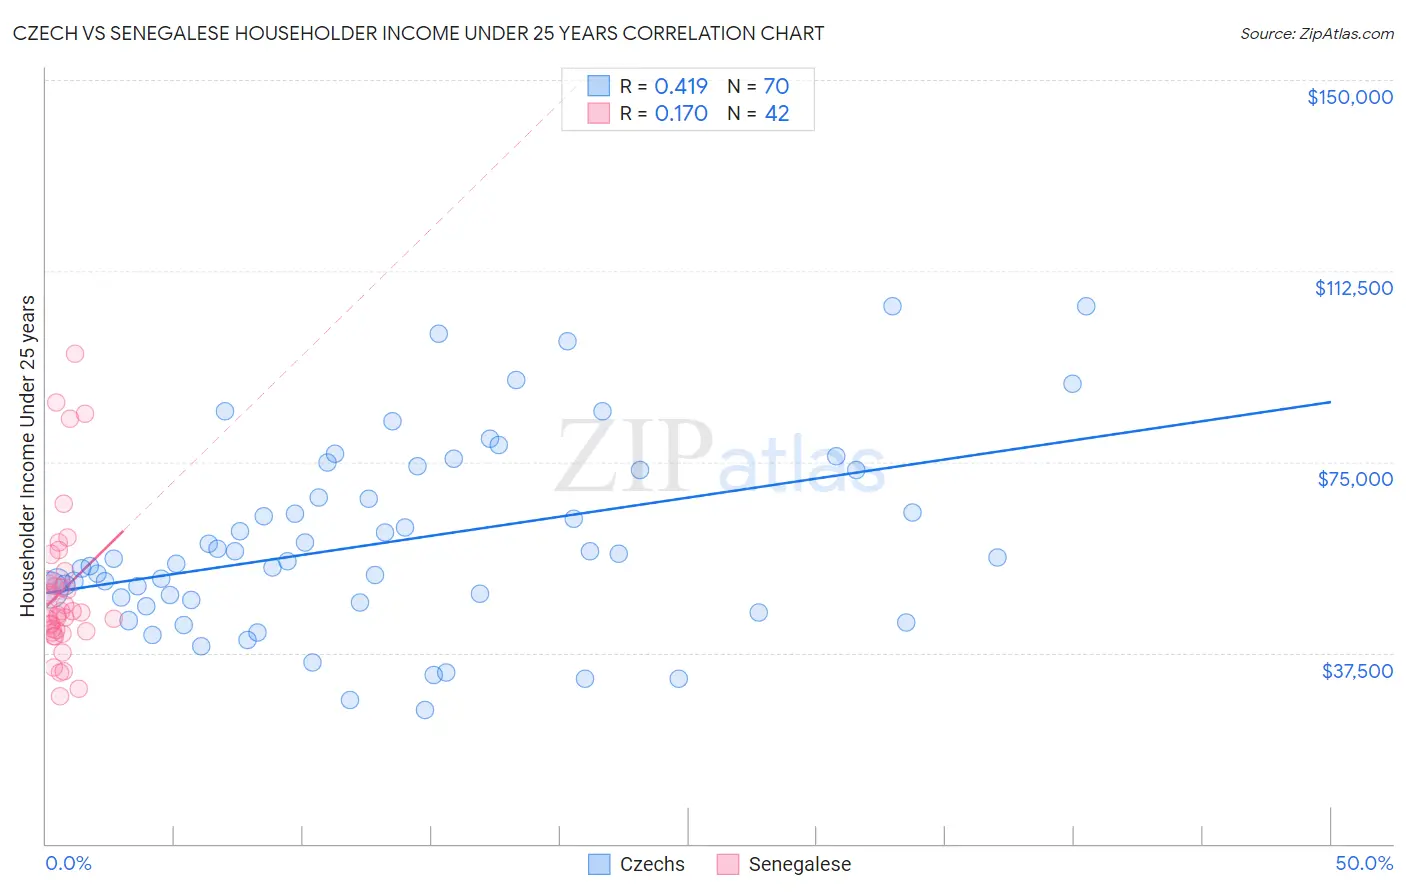 Czech vs Senegalese Householder Income Under 25 years